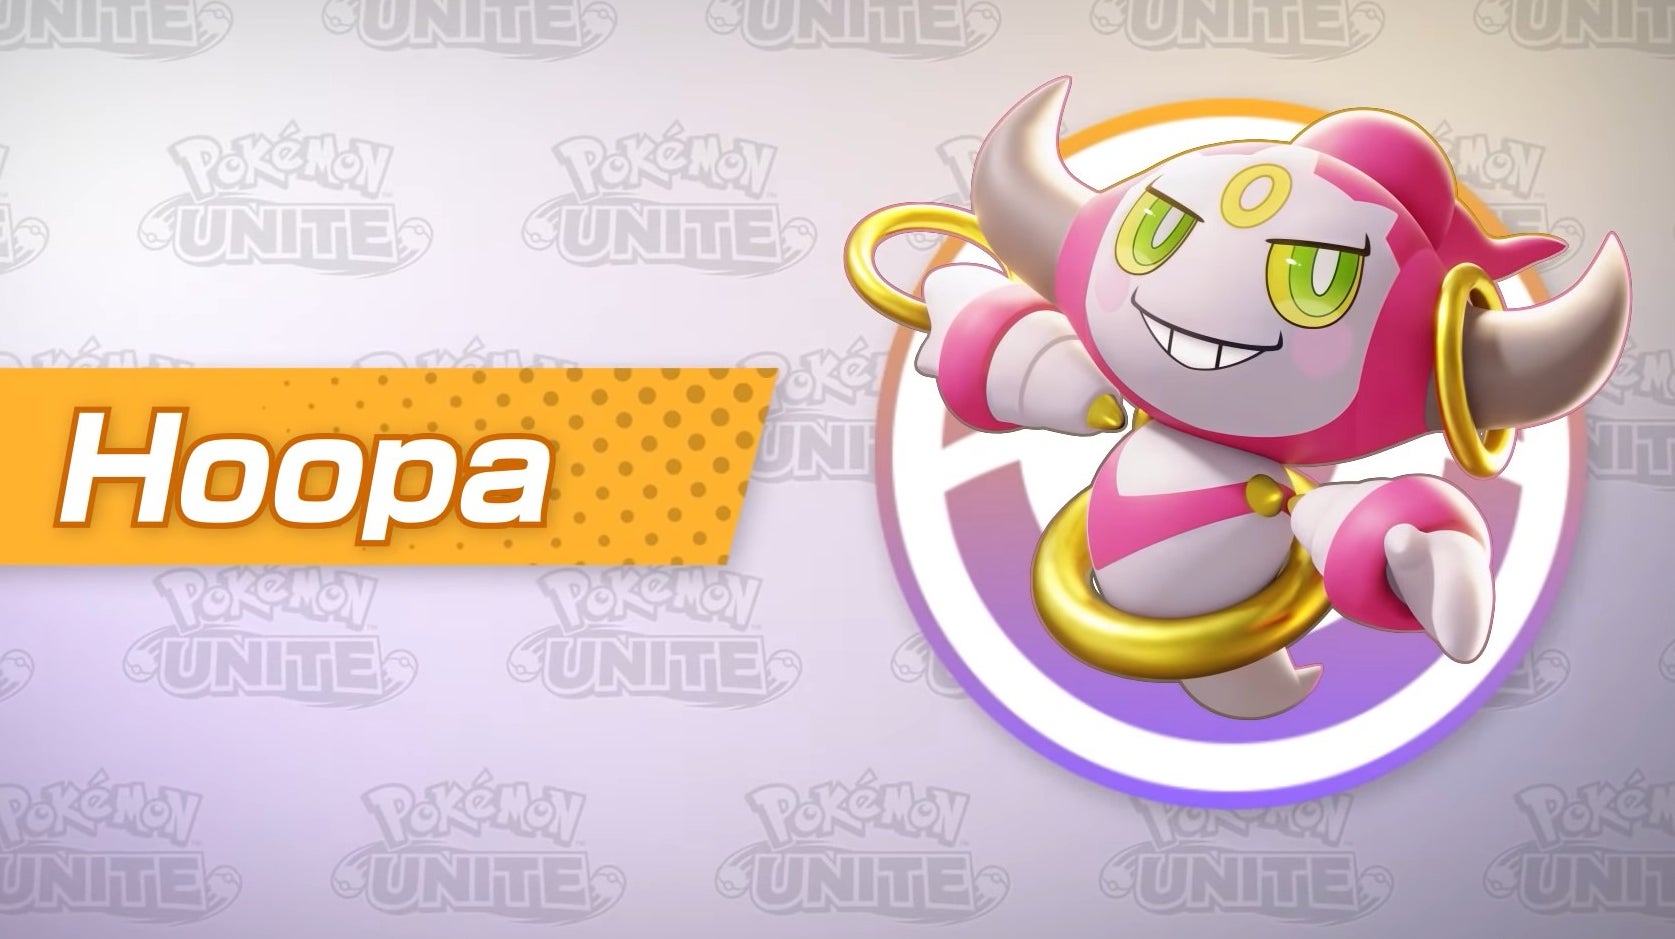 Image for Hoopa has entered Pokémon Unite's frenzied arena